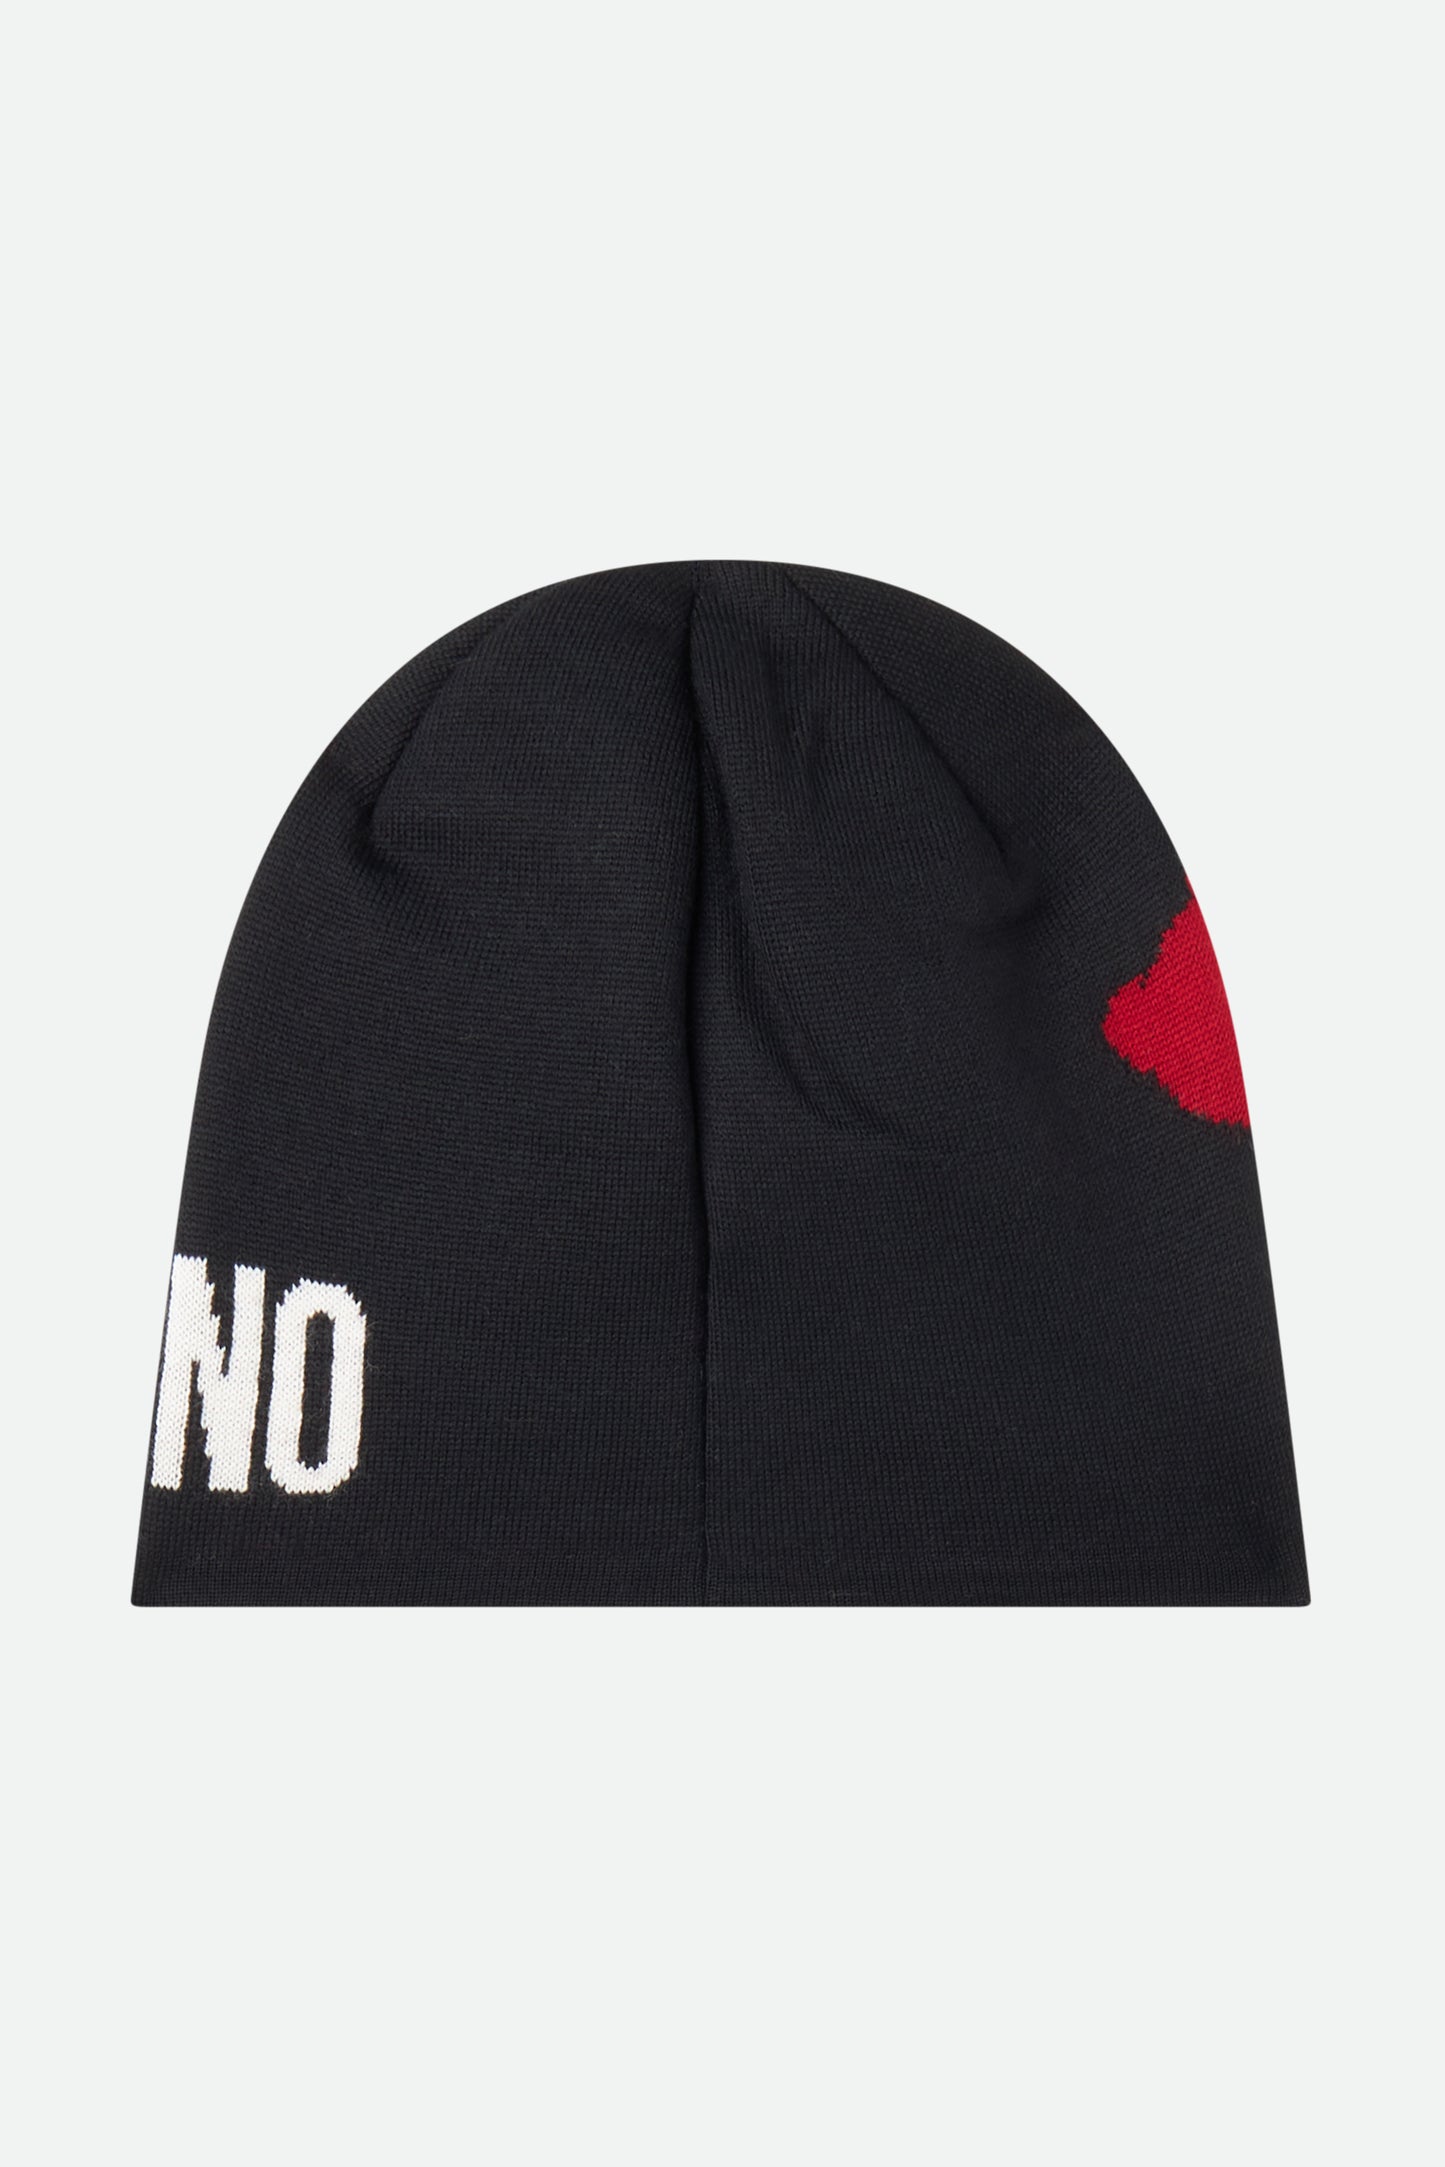 Moschino Black Wool Hat